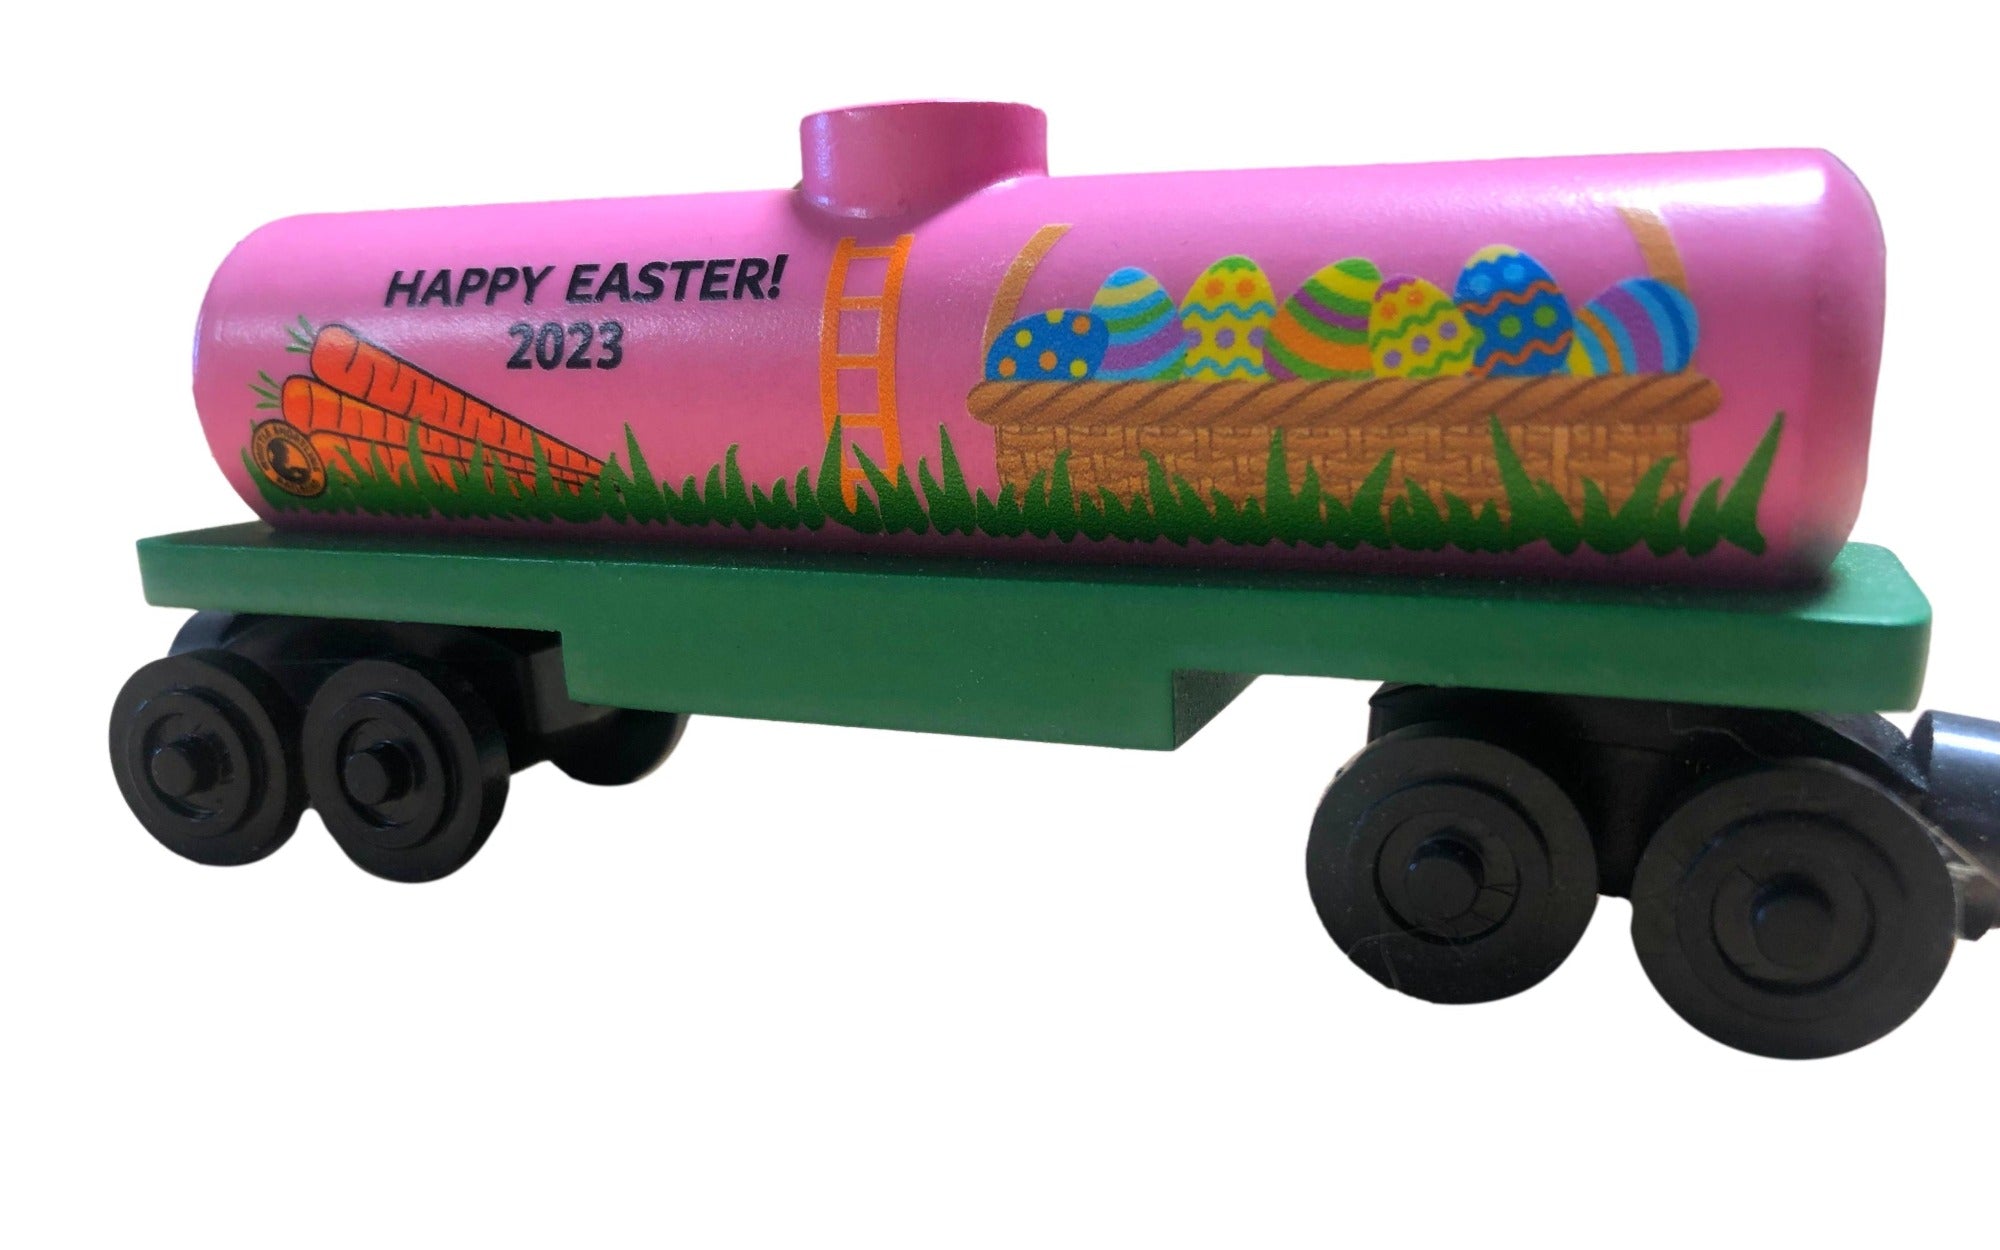 Easter 2023 Tanker Toy Train Car by Whittle Shortline Railroad